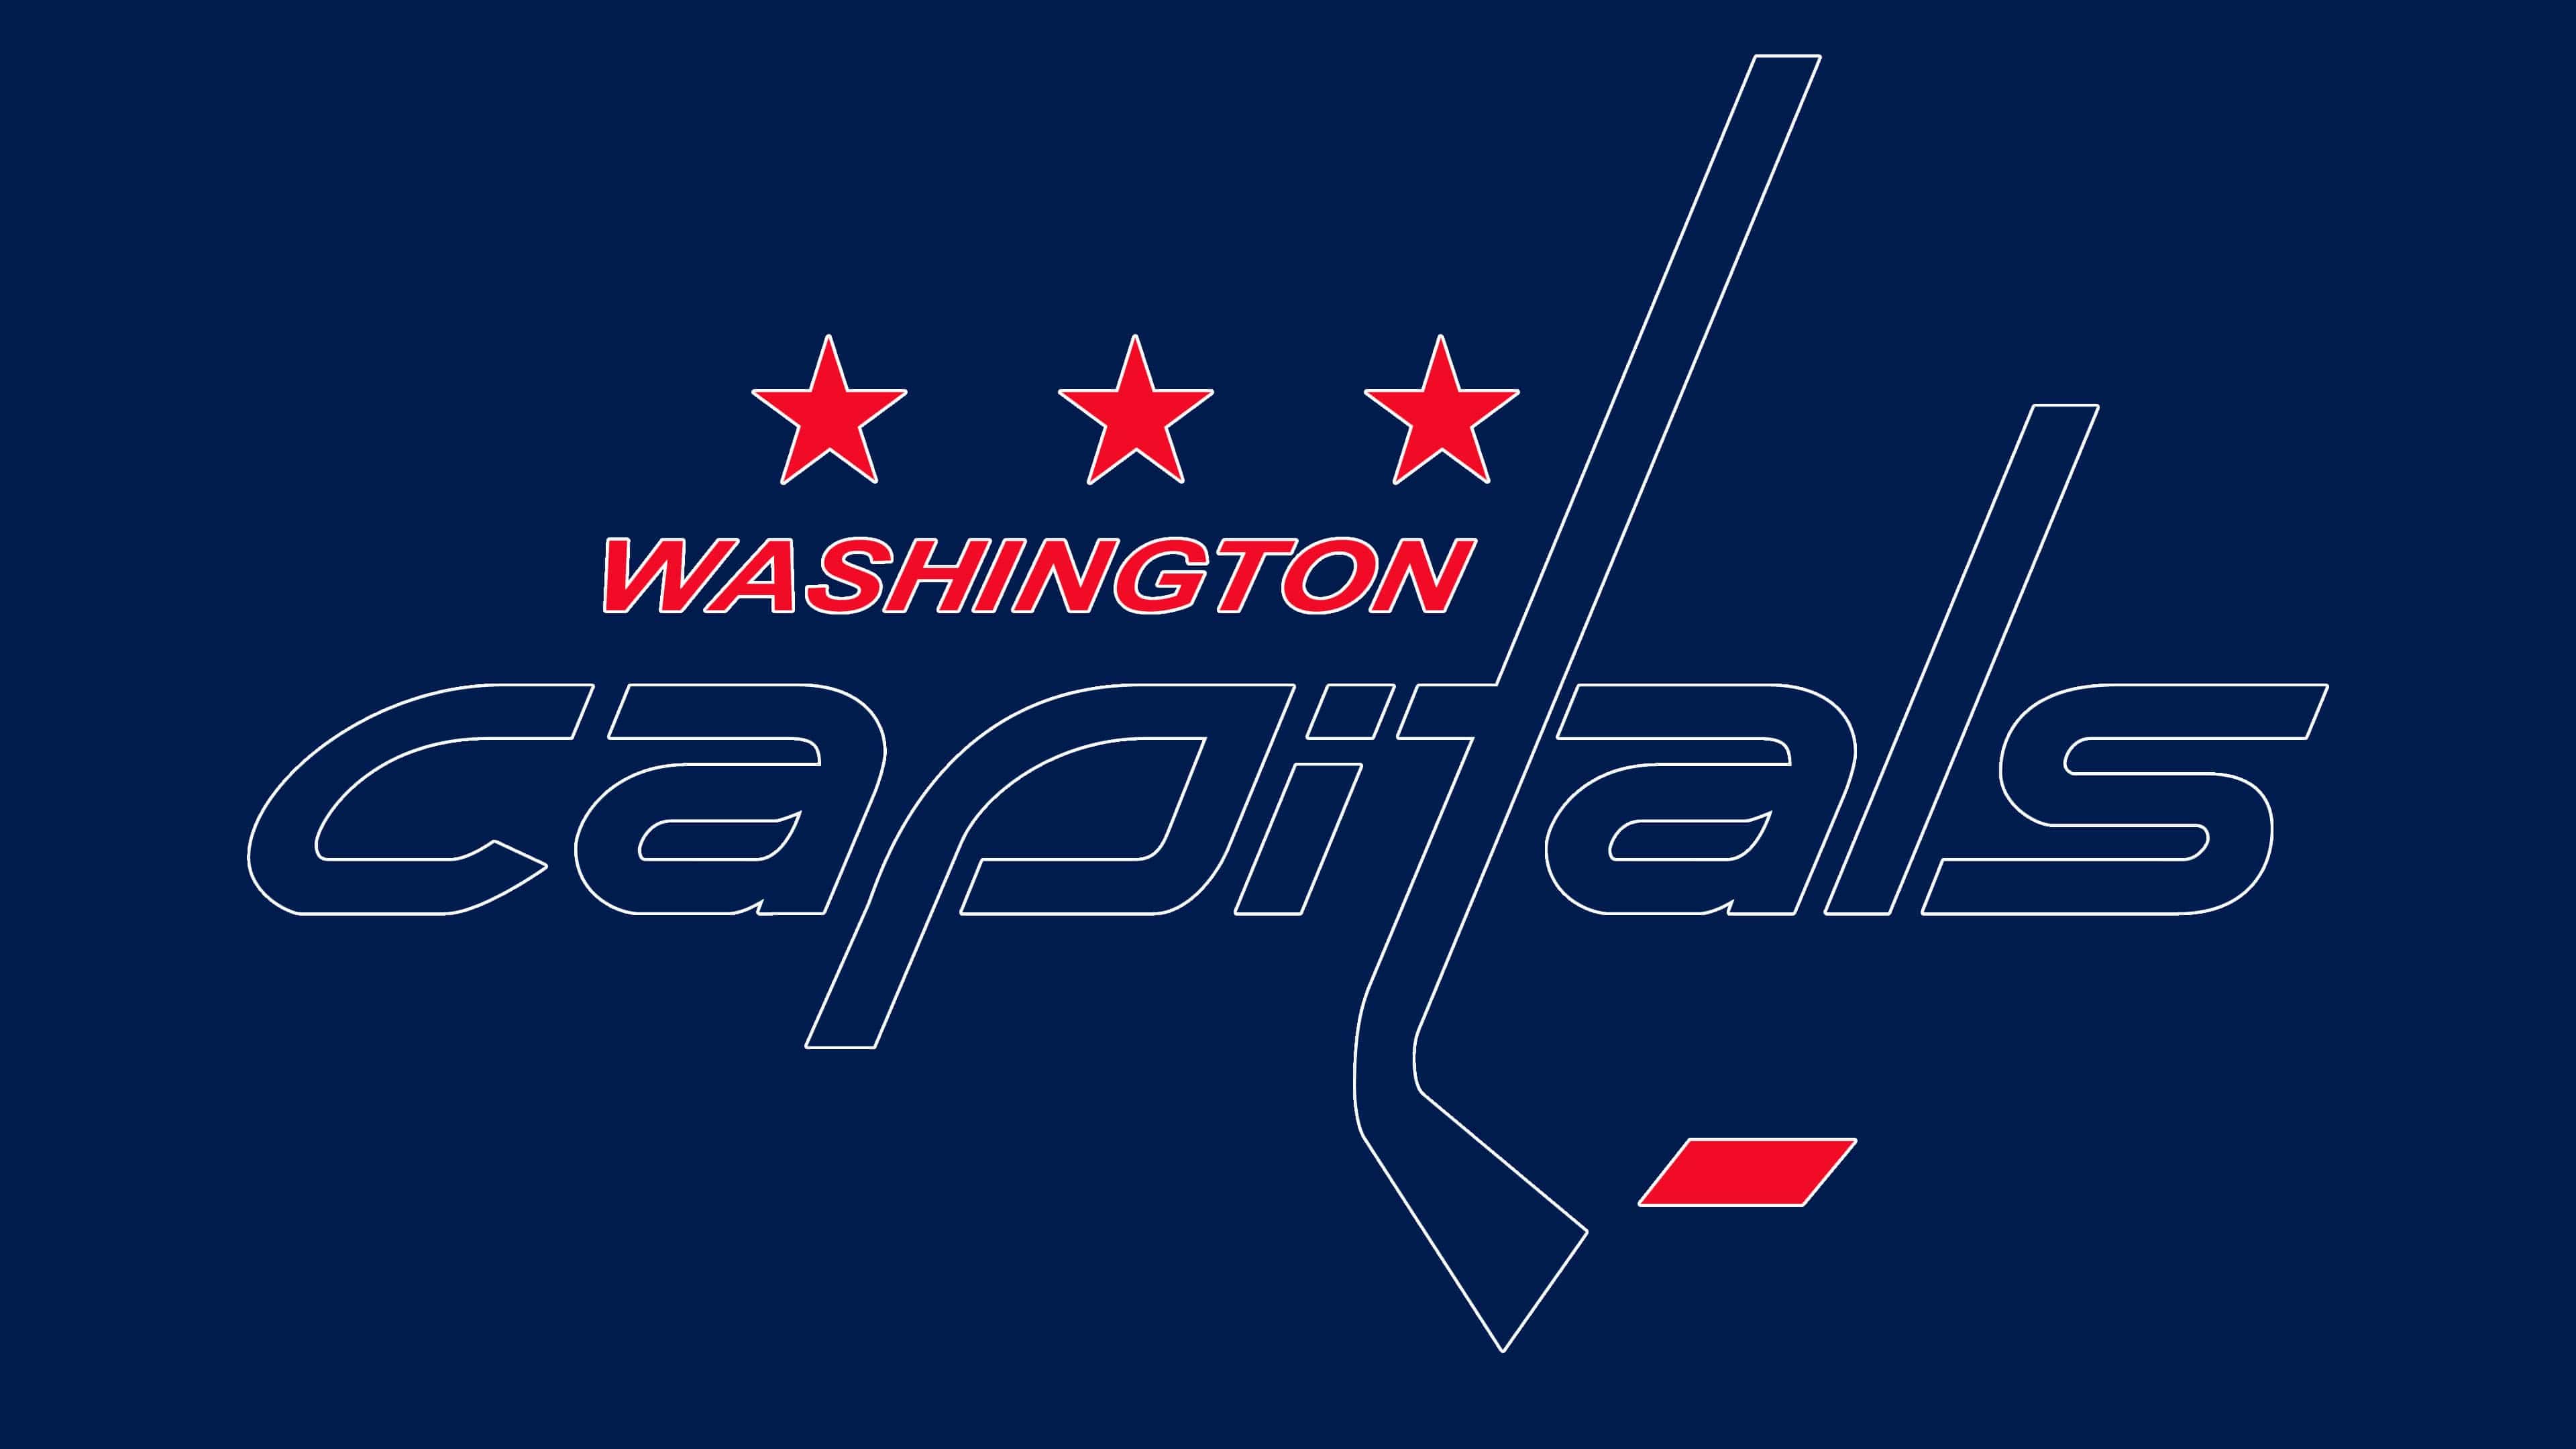 Washington Capitals on X: Looking mean @smithpelly23